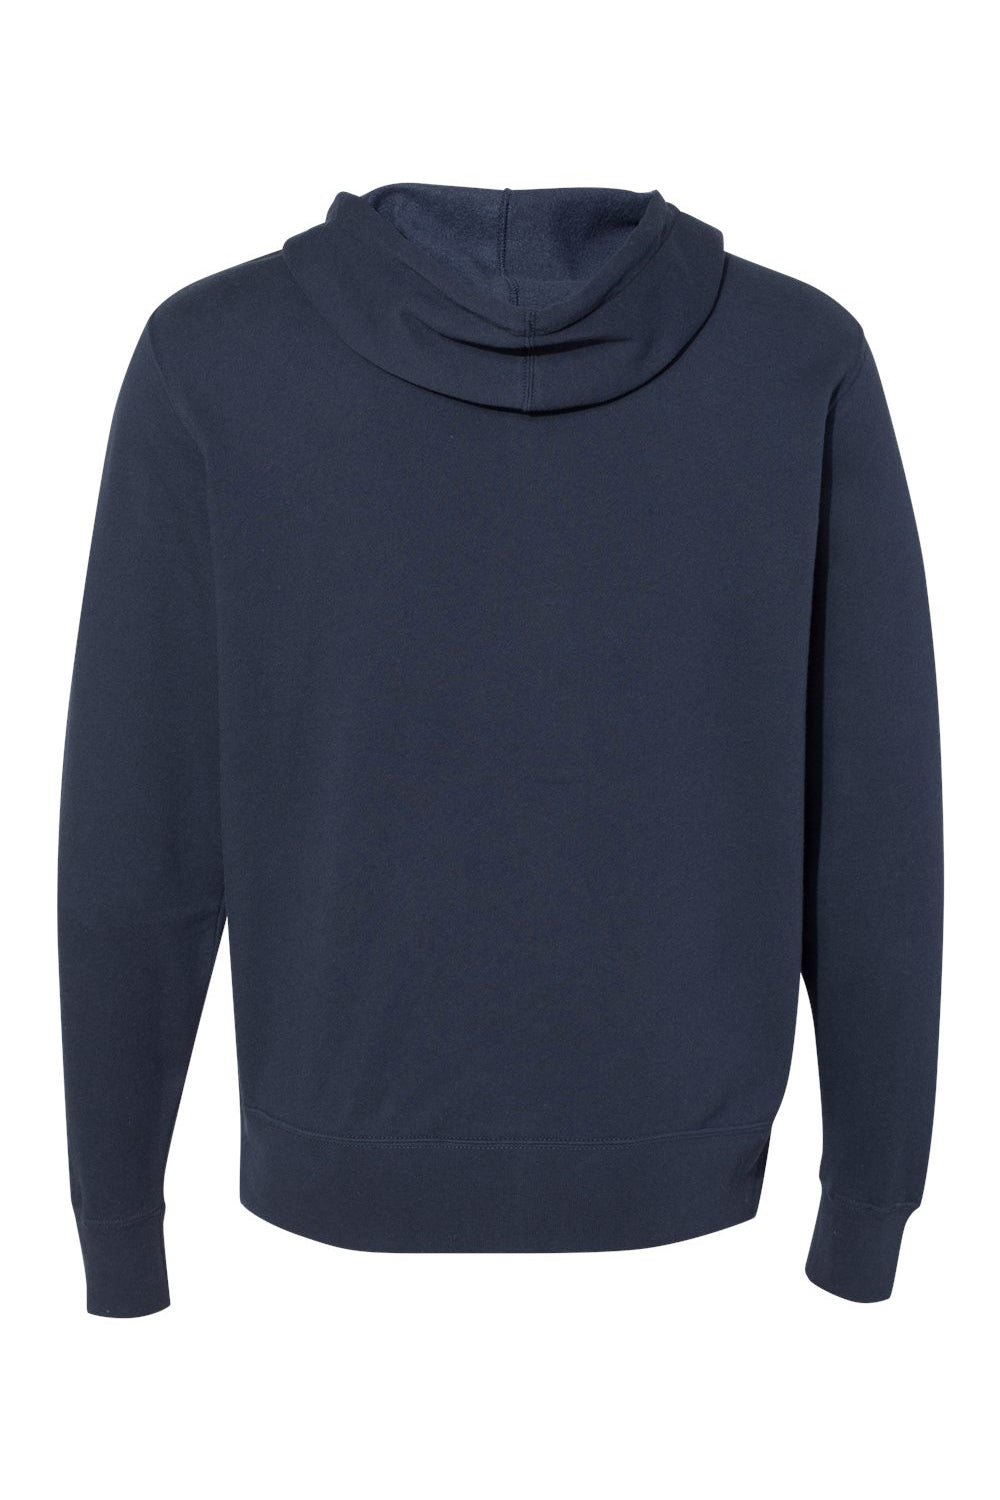 Independent Trading Co. AFX90UNZ Mens Full Zip Hooded Sweatshirt Hoodie Slate Blue Flat Back